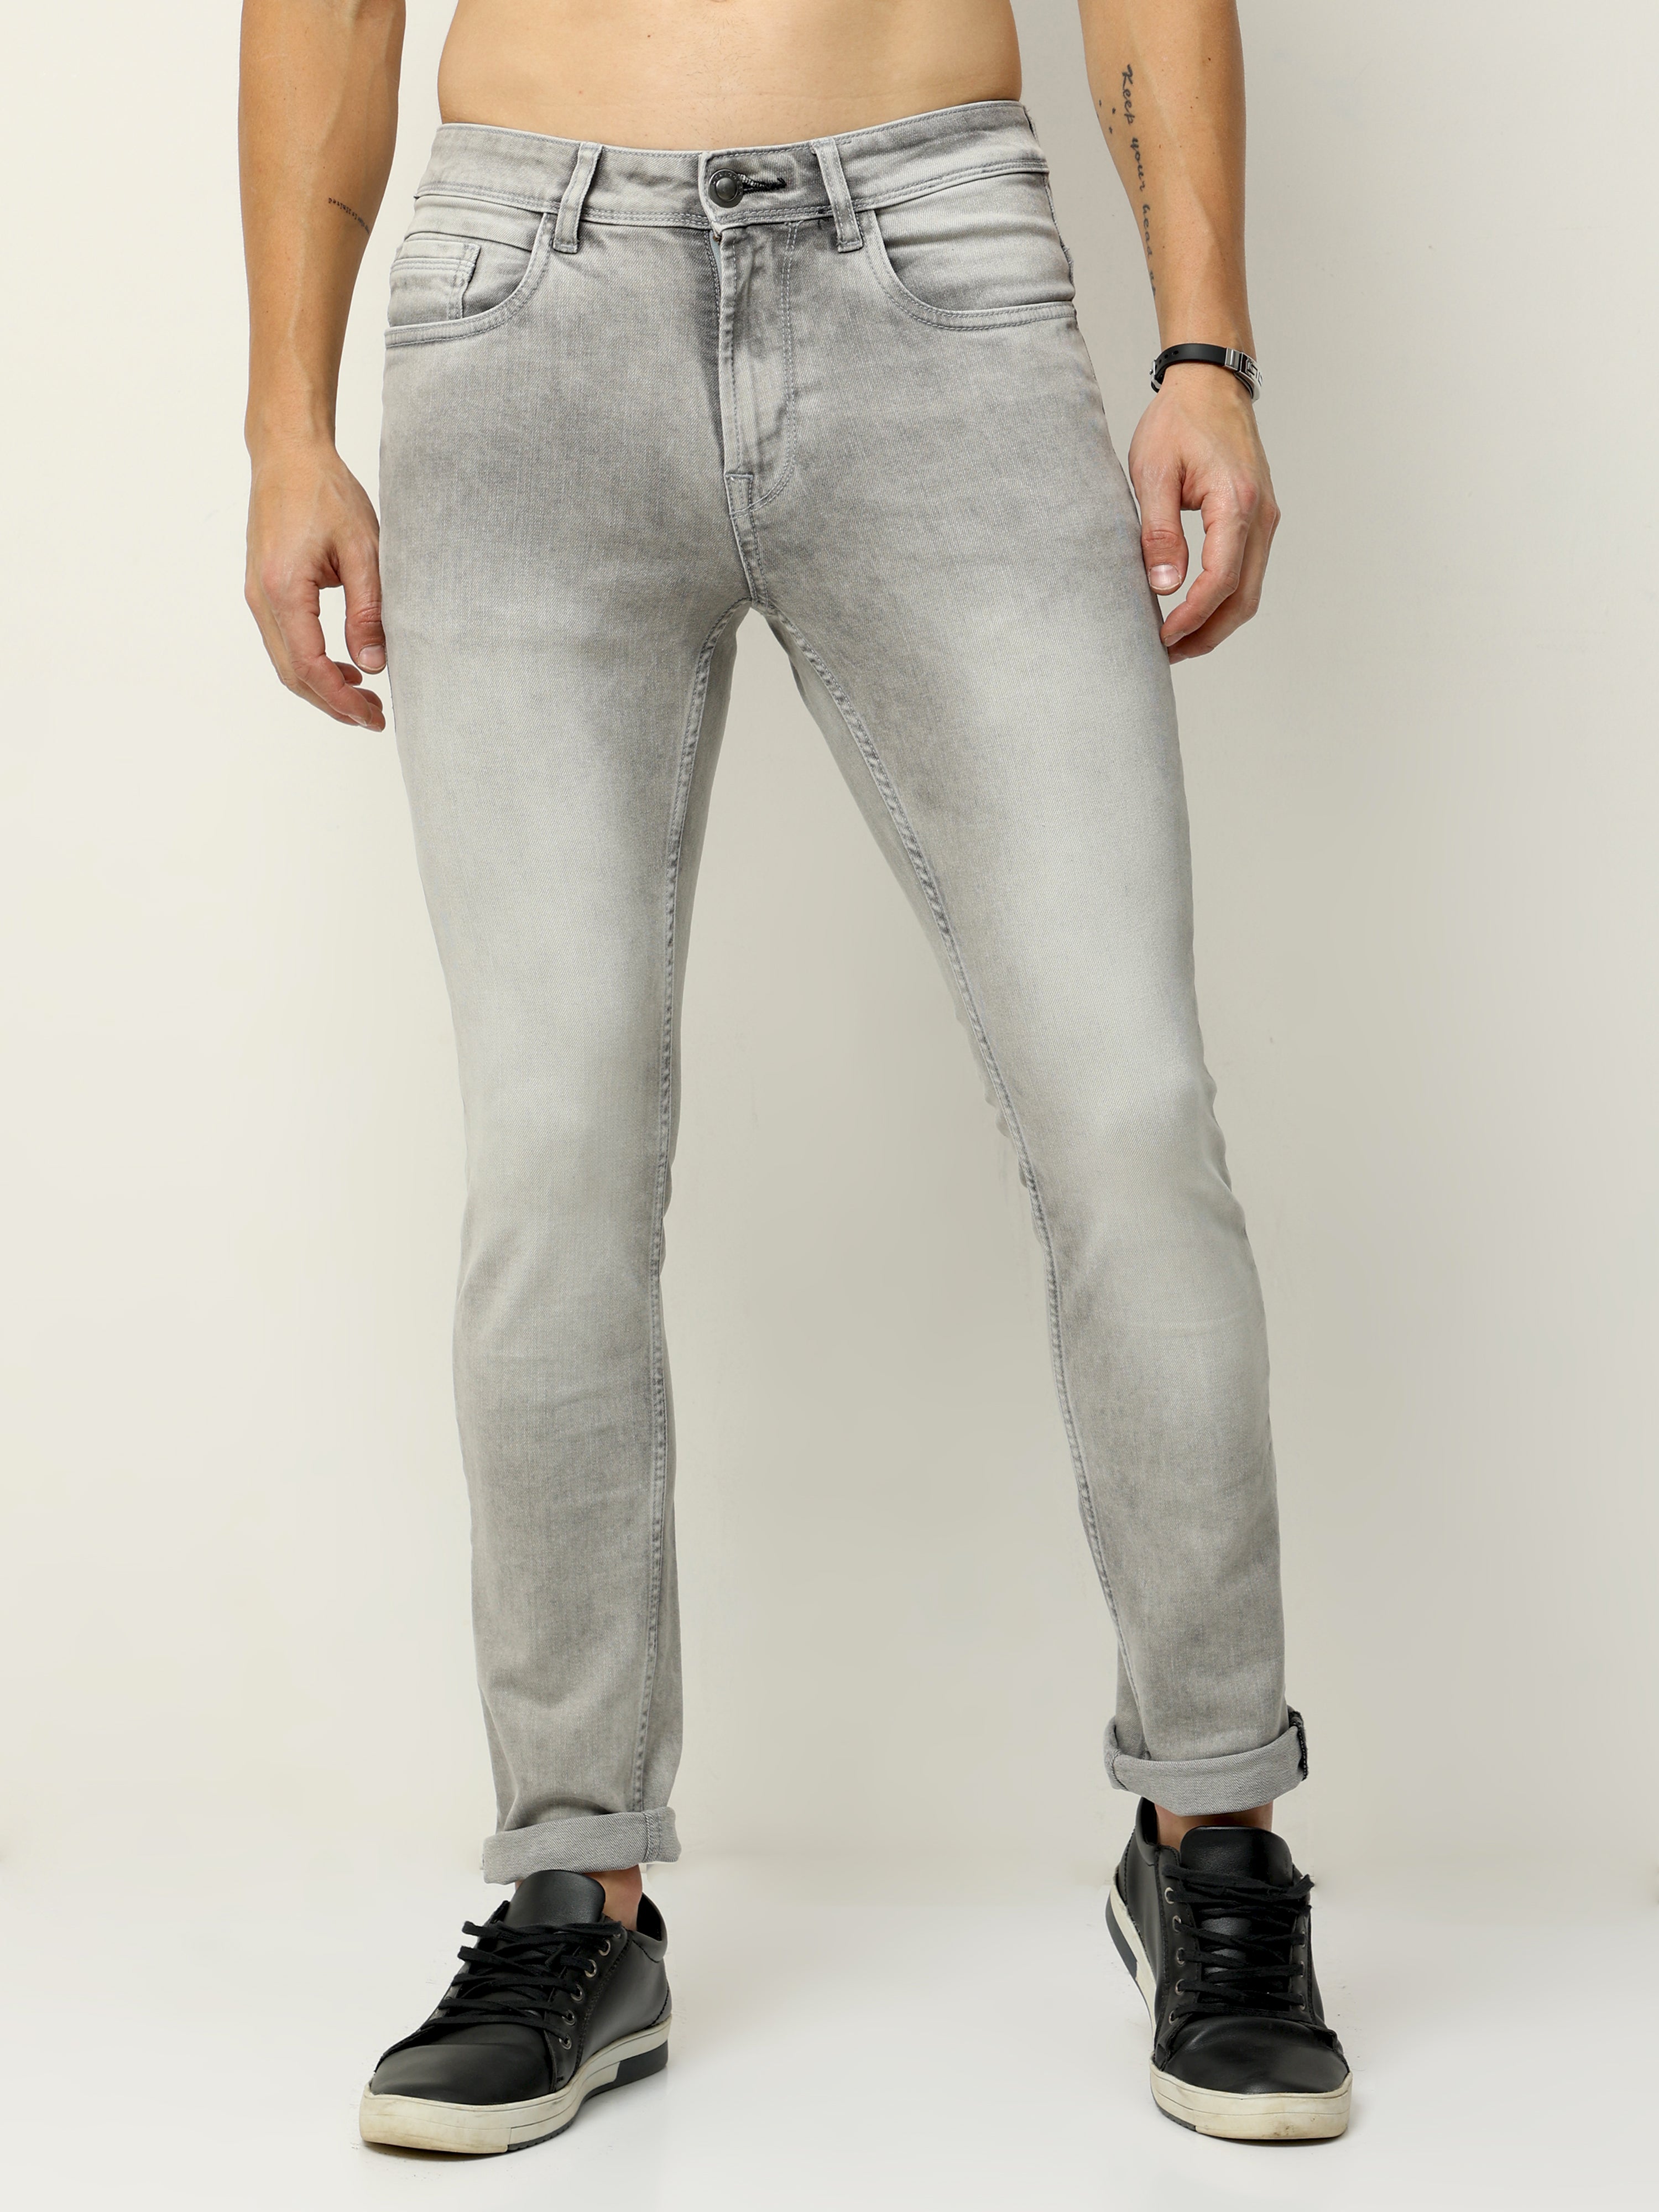 Buy Grey Jeans for Men by DNMX Online  Ajiocom